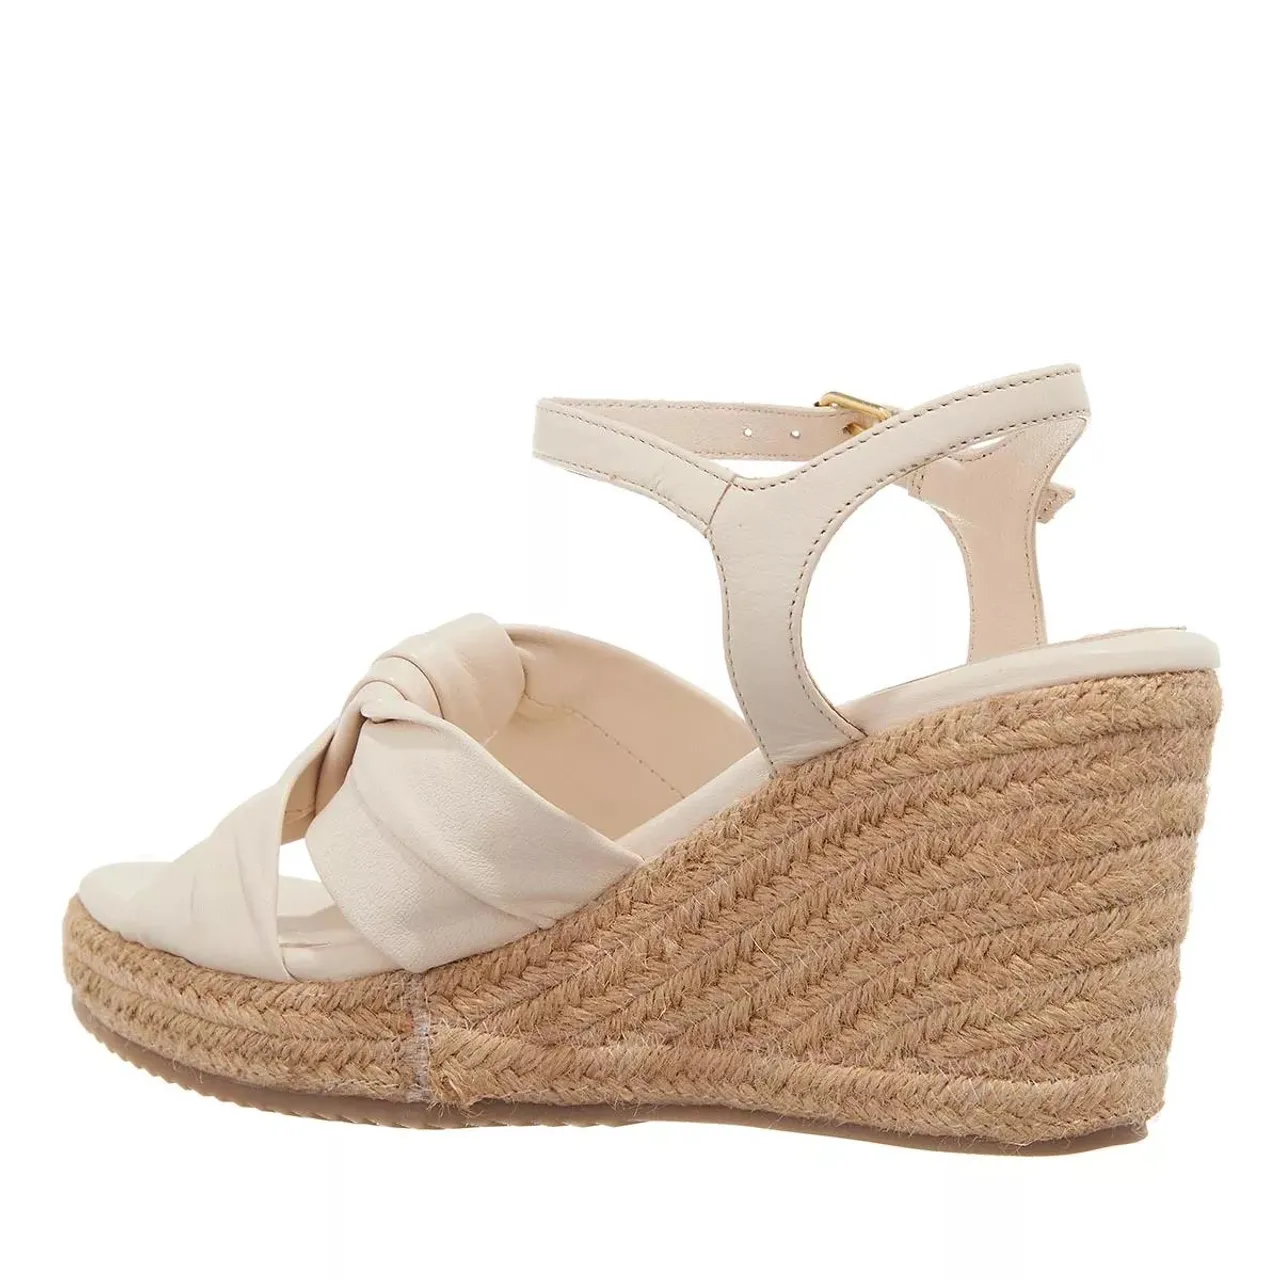 Ted Baker Sandals - Carda Knotted Wedge Espadrille Sandal - beige - Sandals for ladies